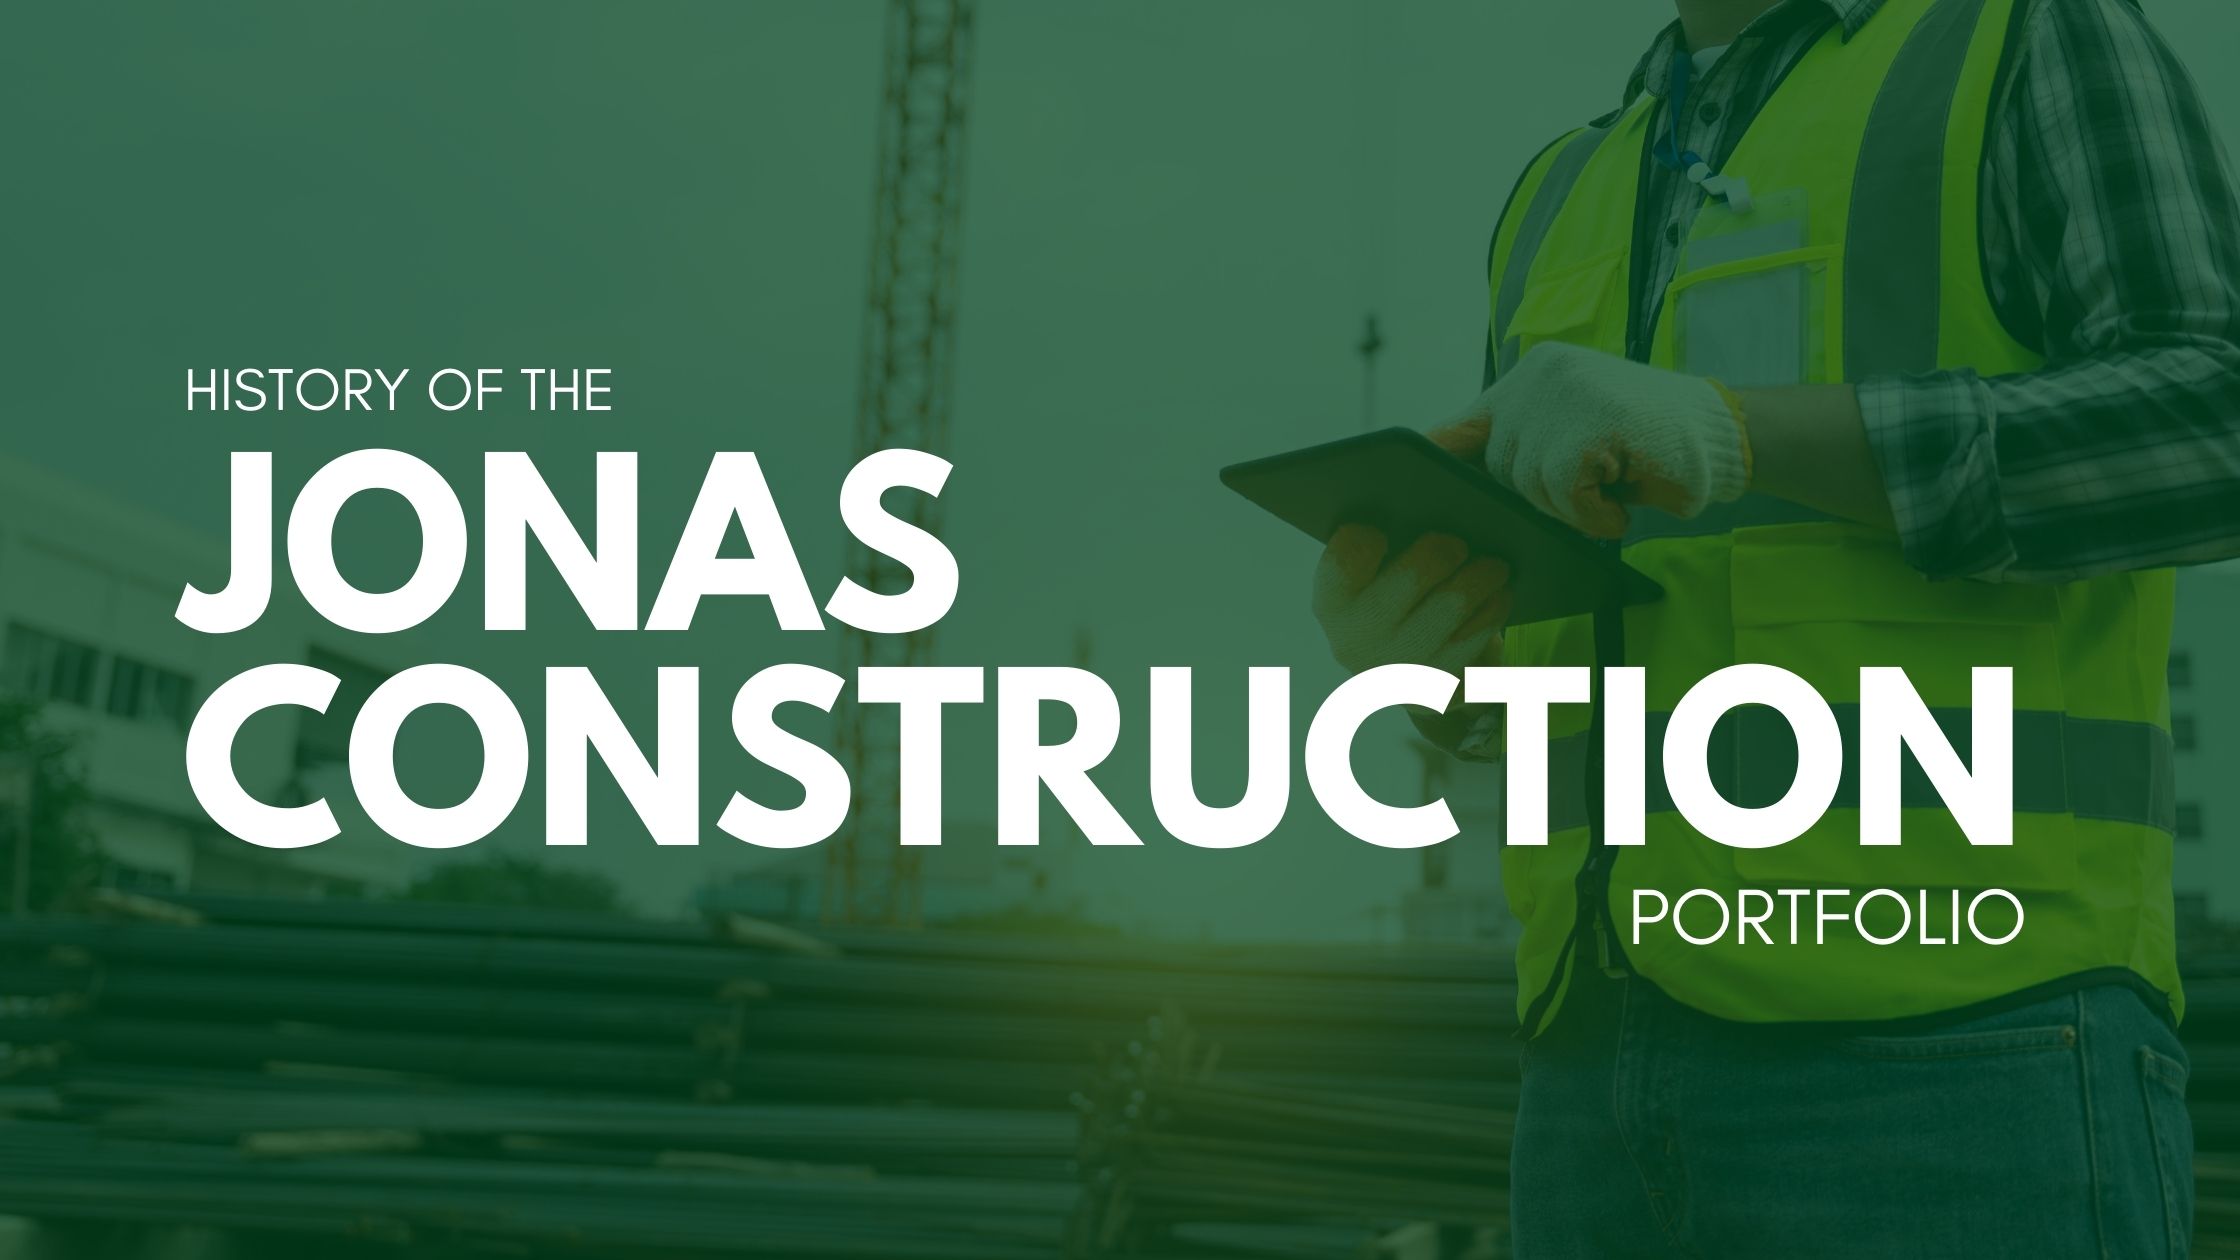 The History of the Jonas Construction Portfolio